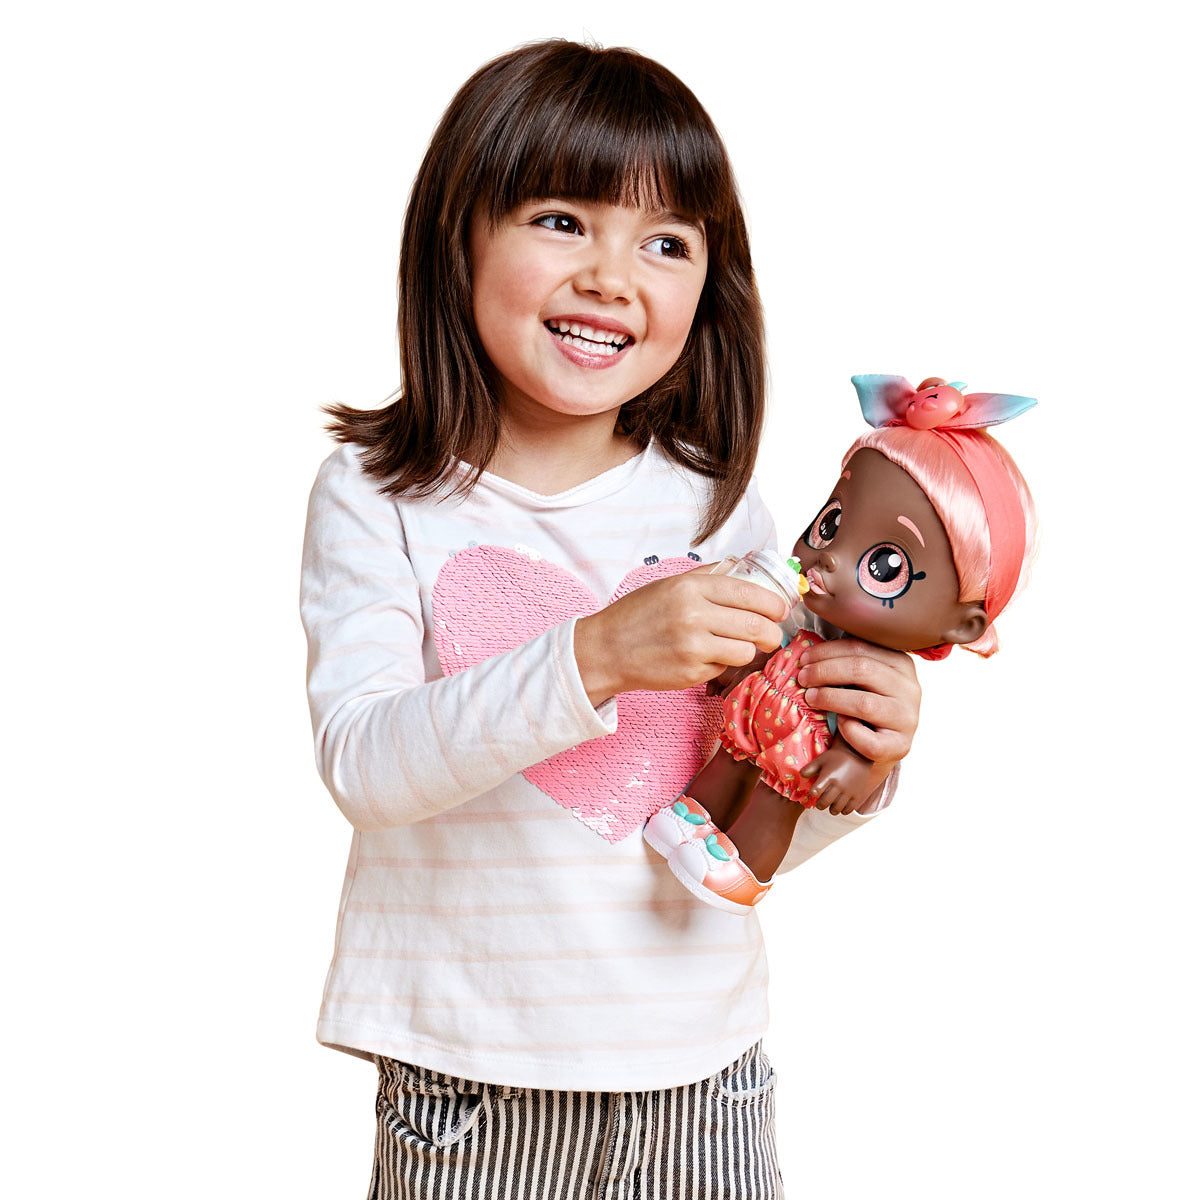 Kindi Kids Summer Peaches 10 inch Toddler Doll